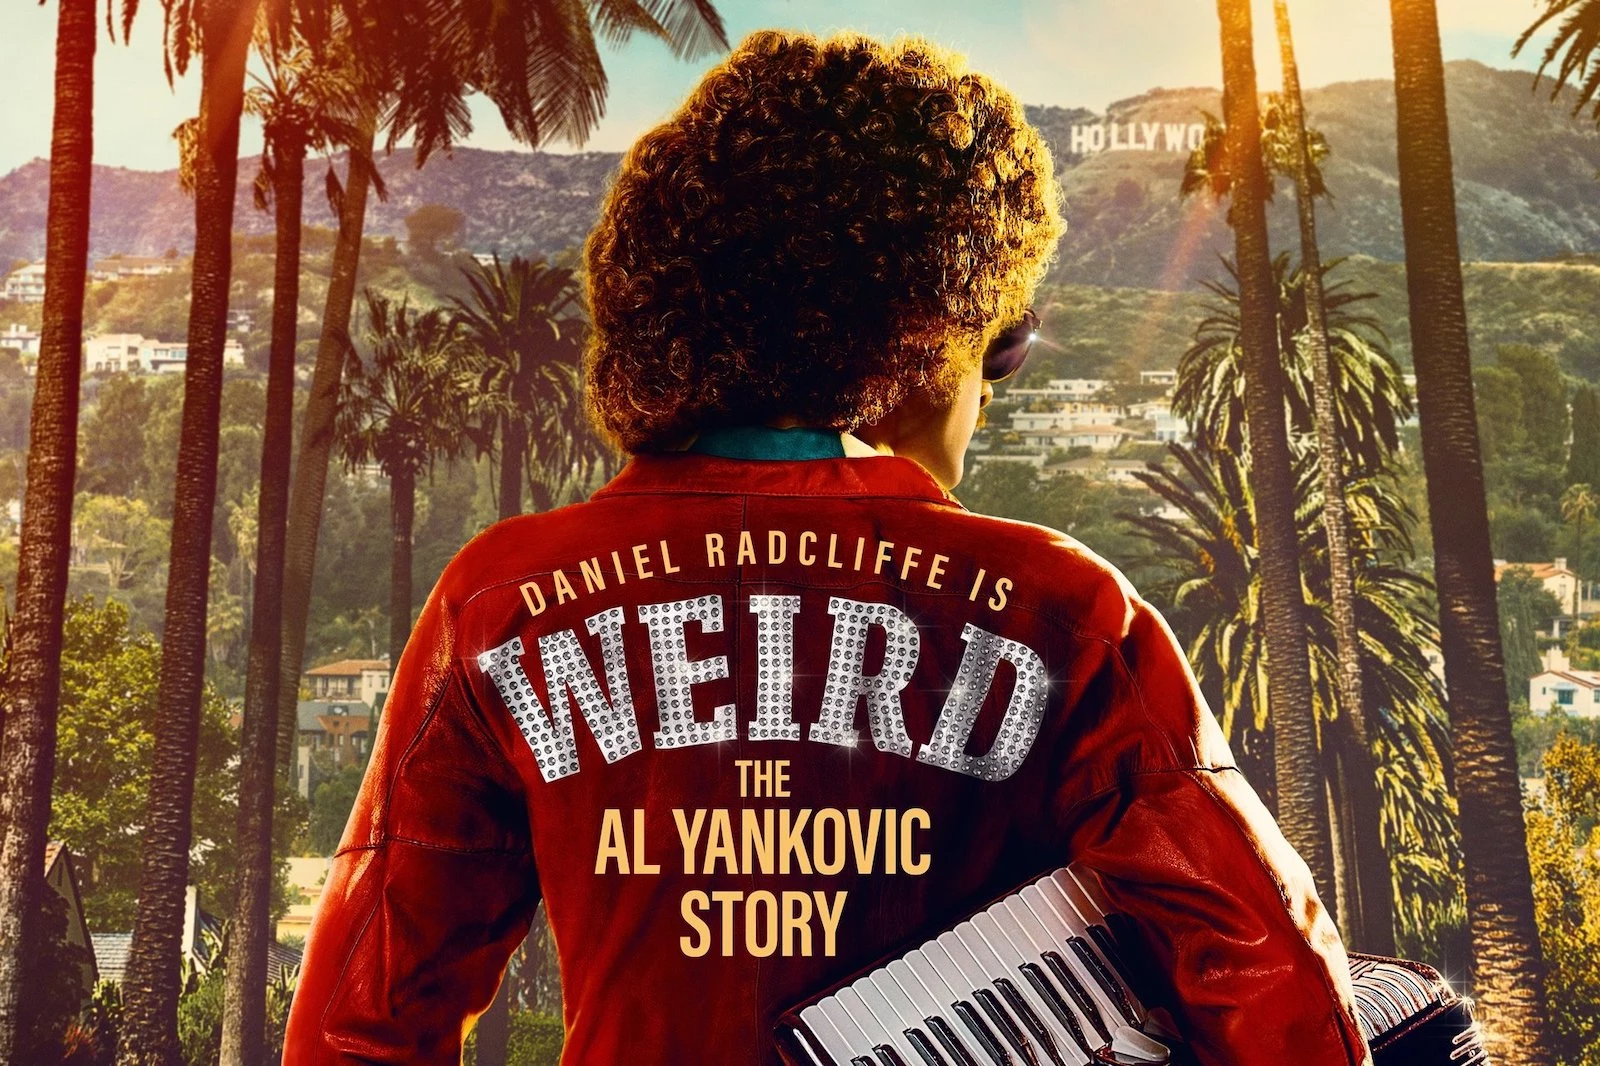 Weird Al Yankovic biopic poster